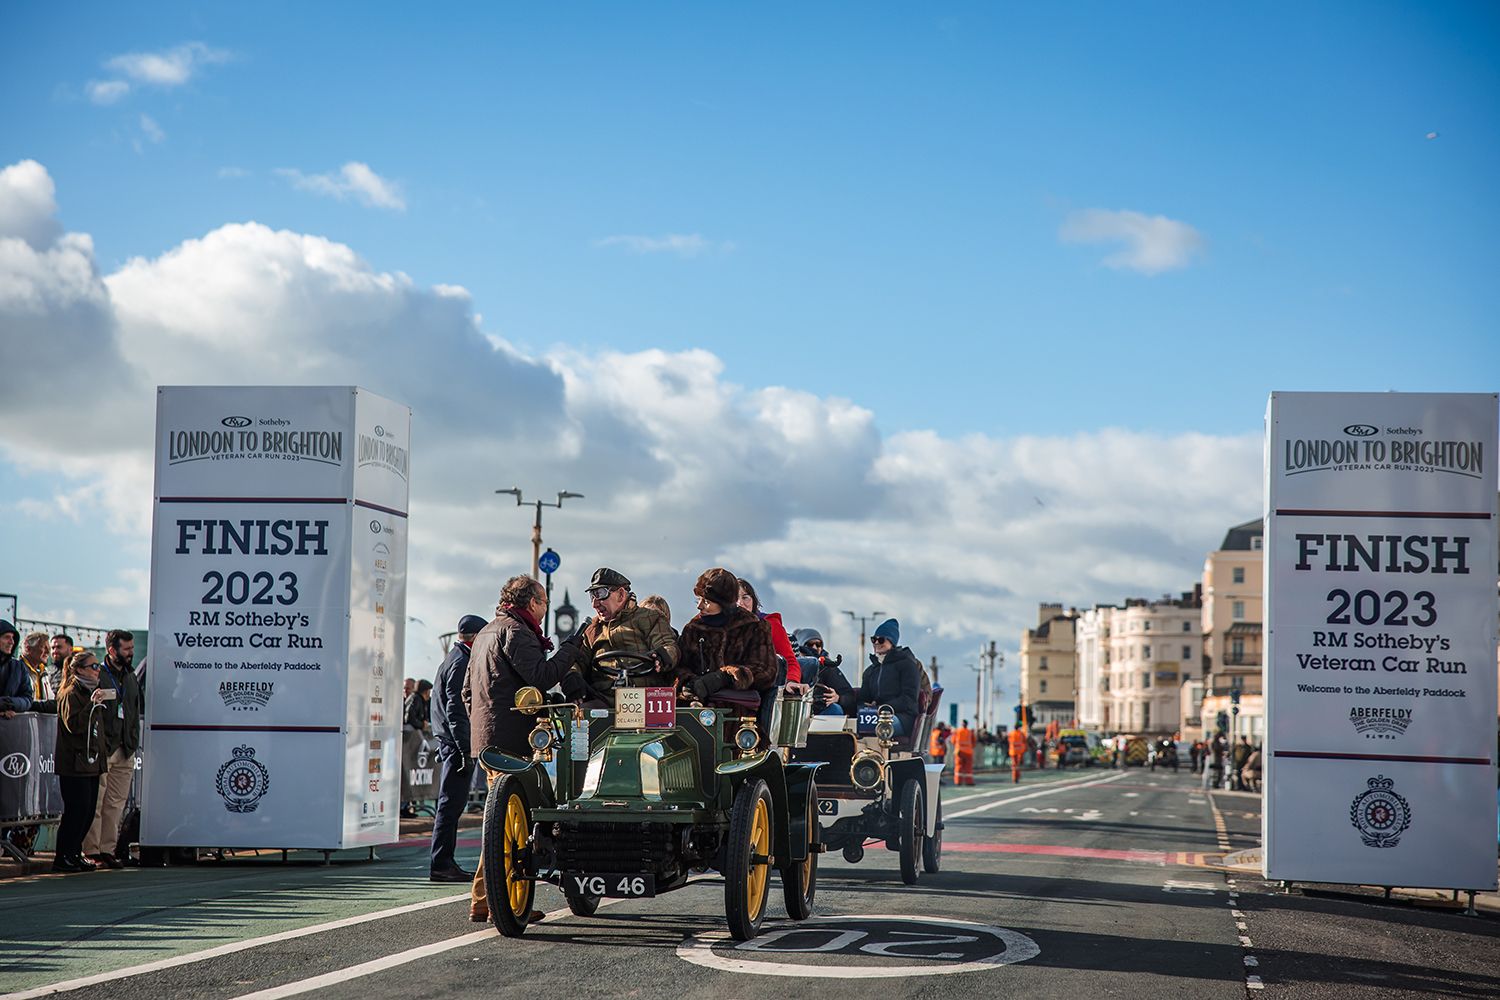 The RM Sotheby's London to Brighton Veteran Car Run Official Finish